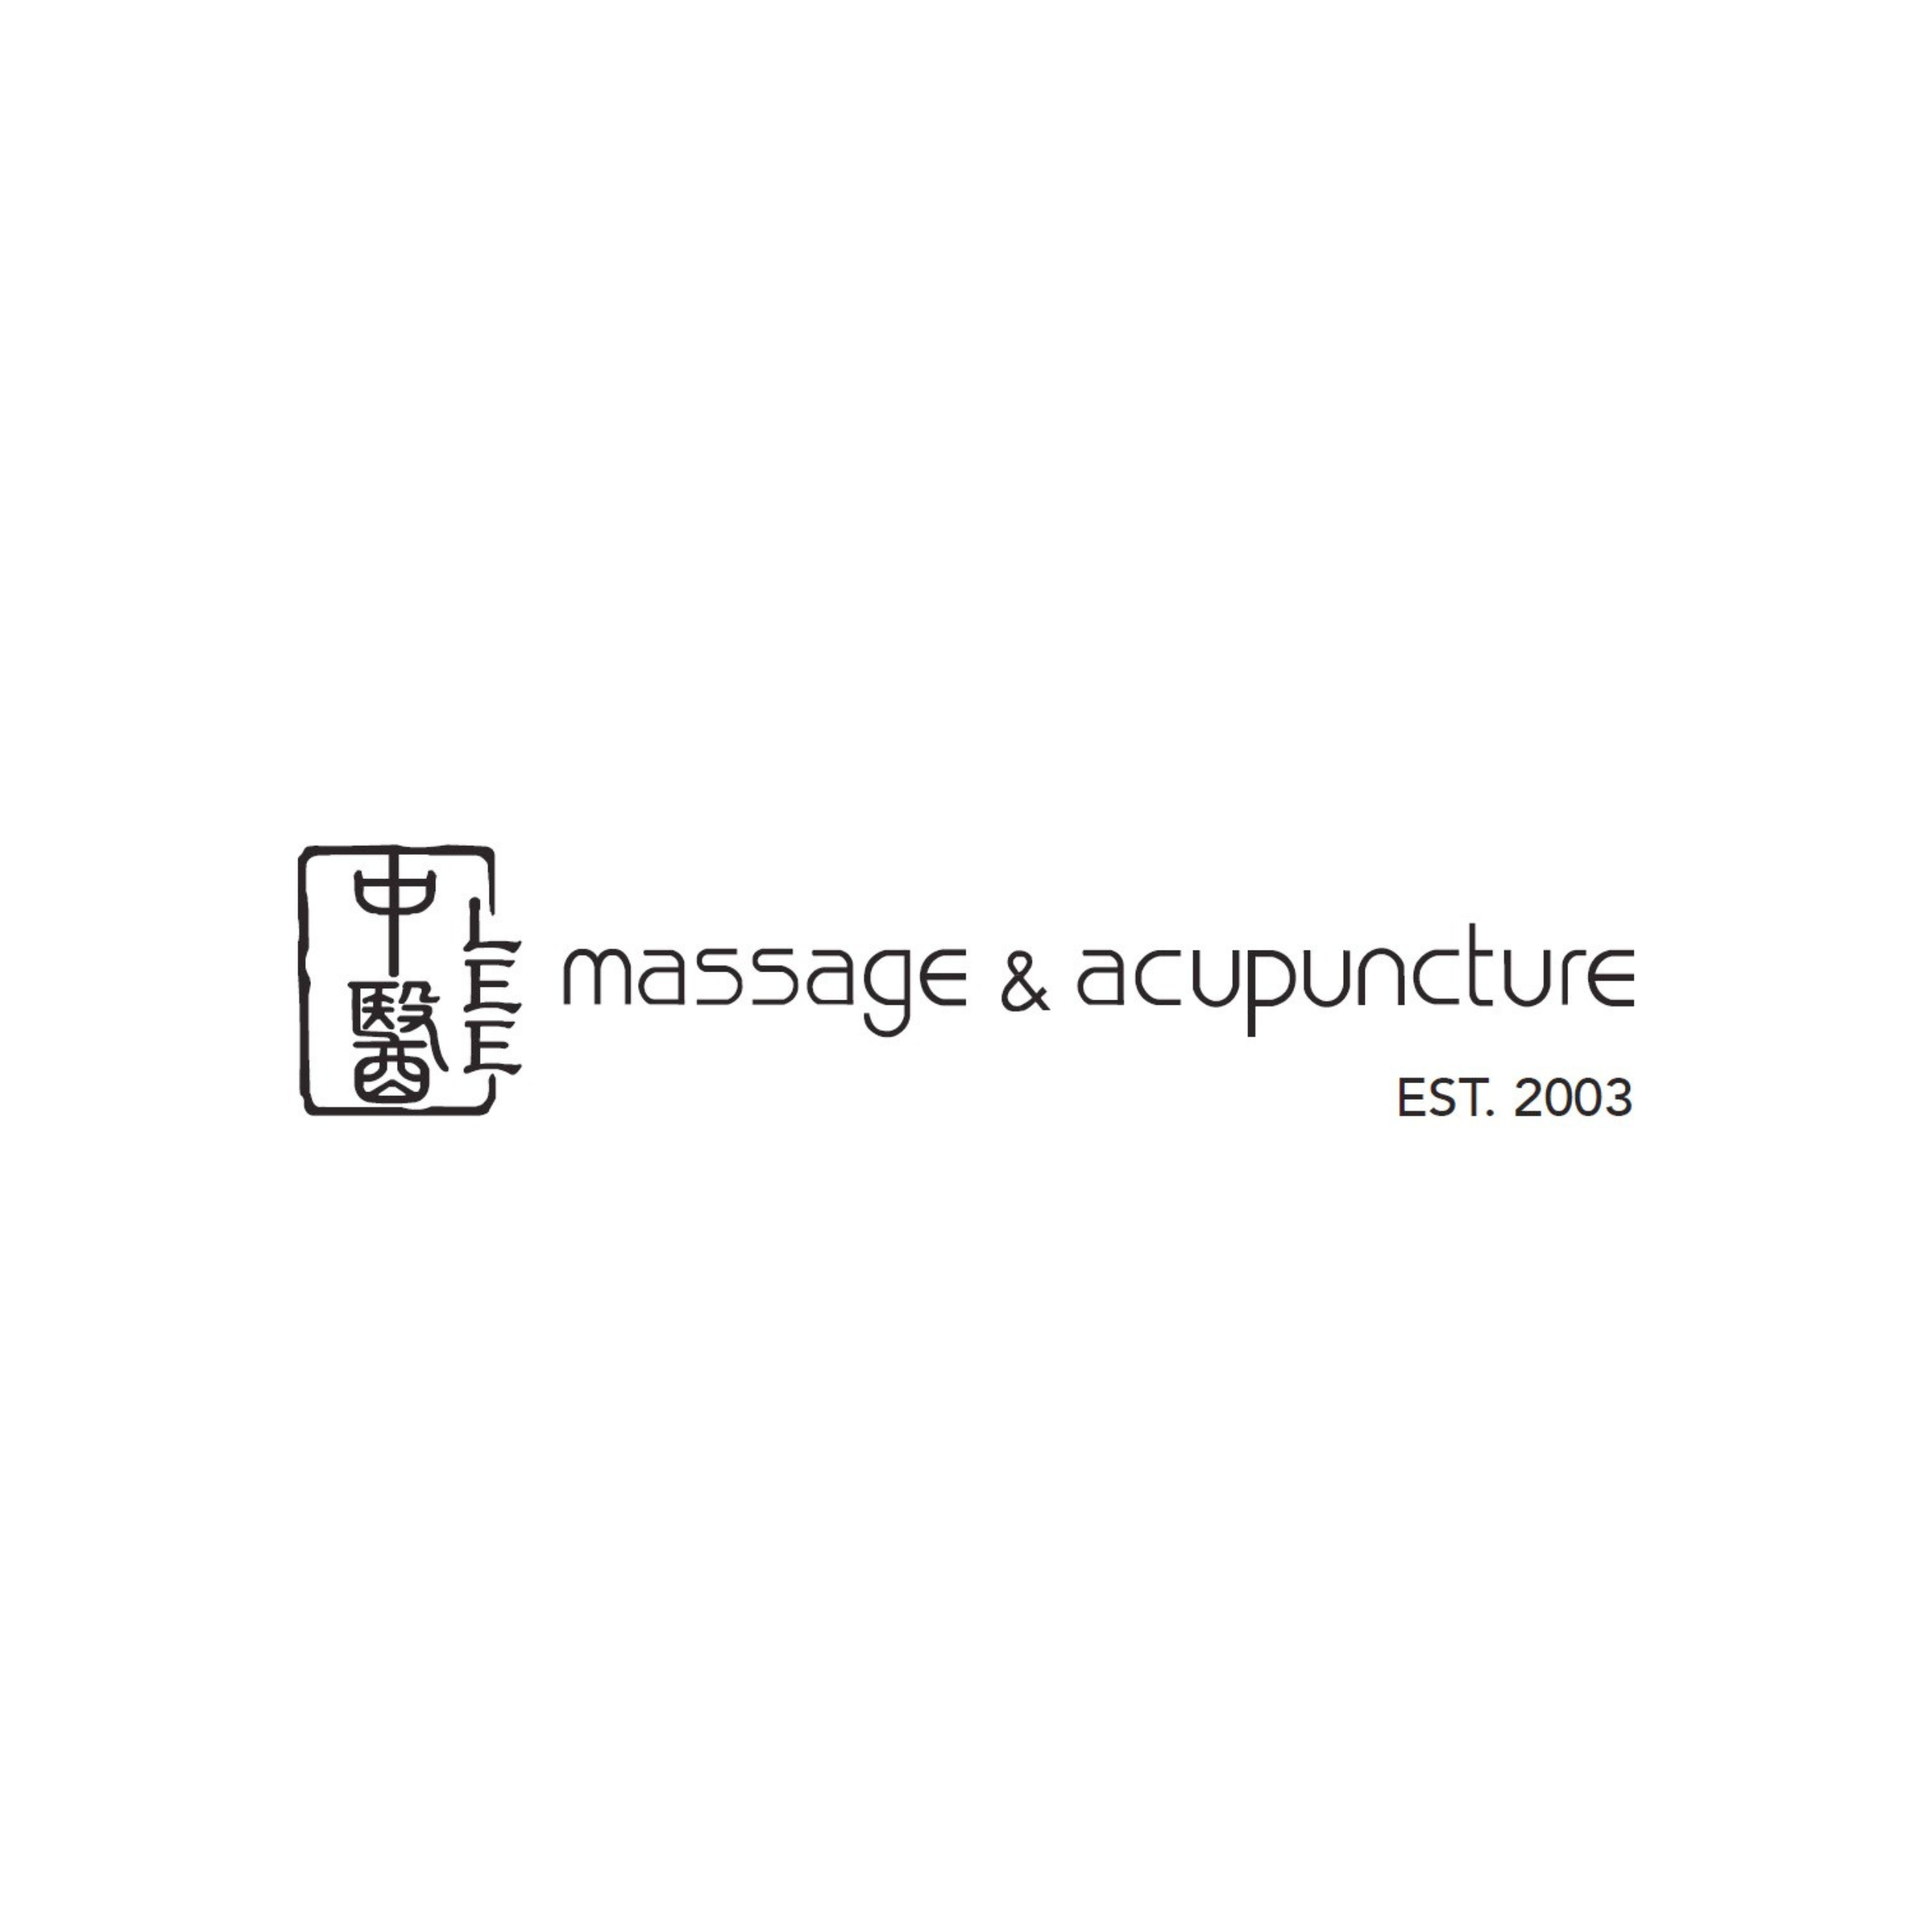 Lee Massage & Acupuncture